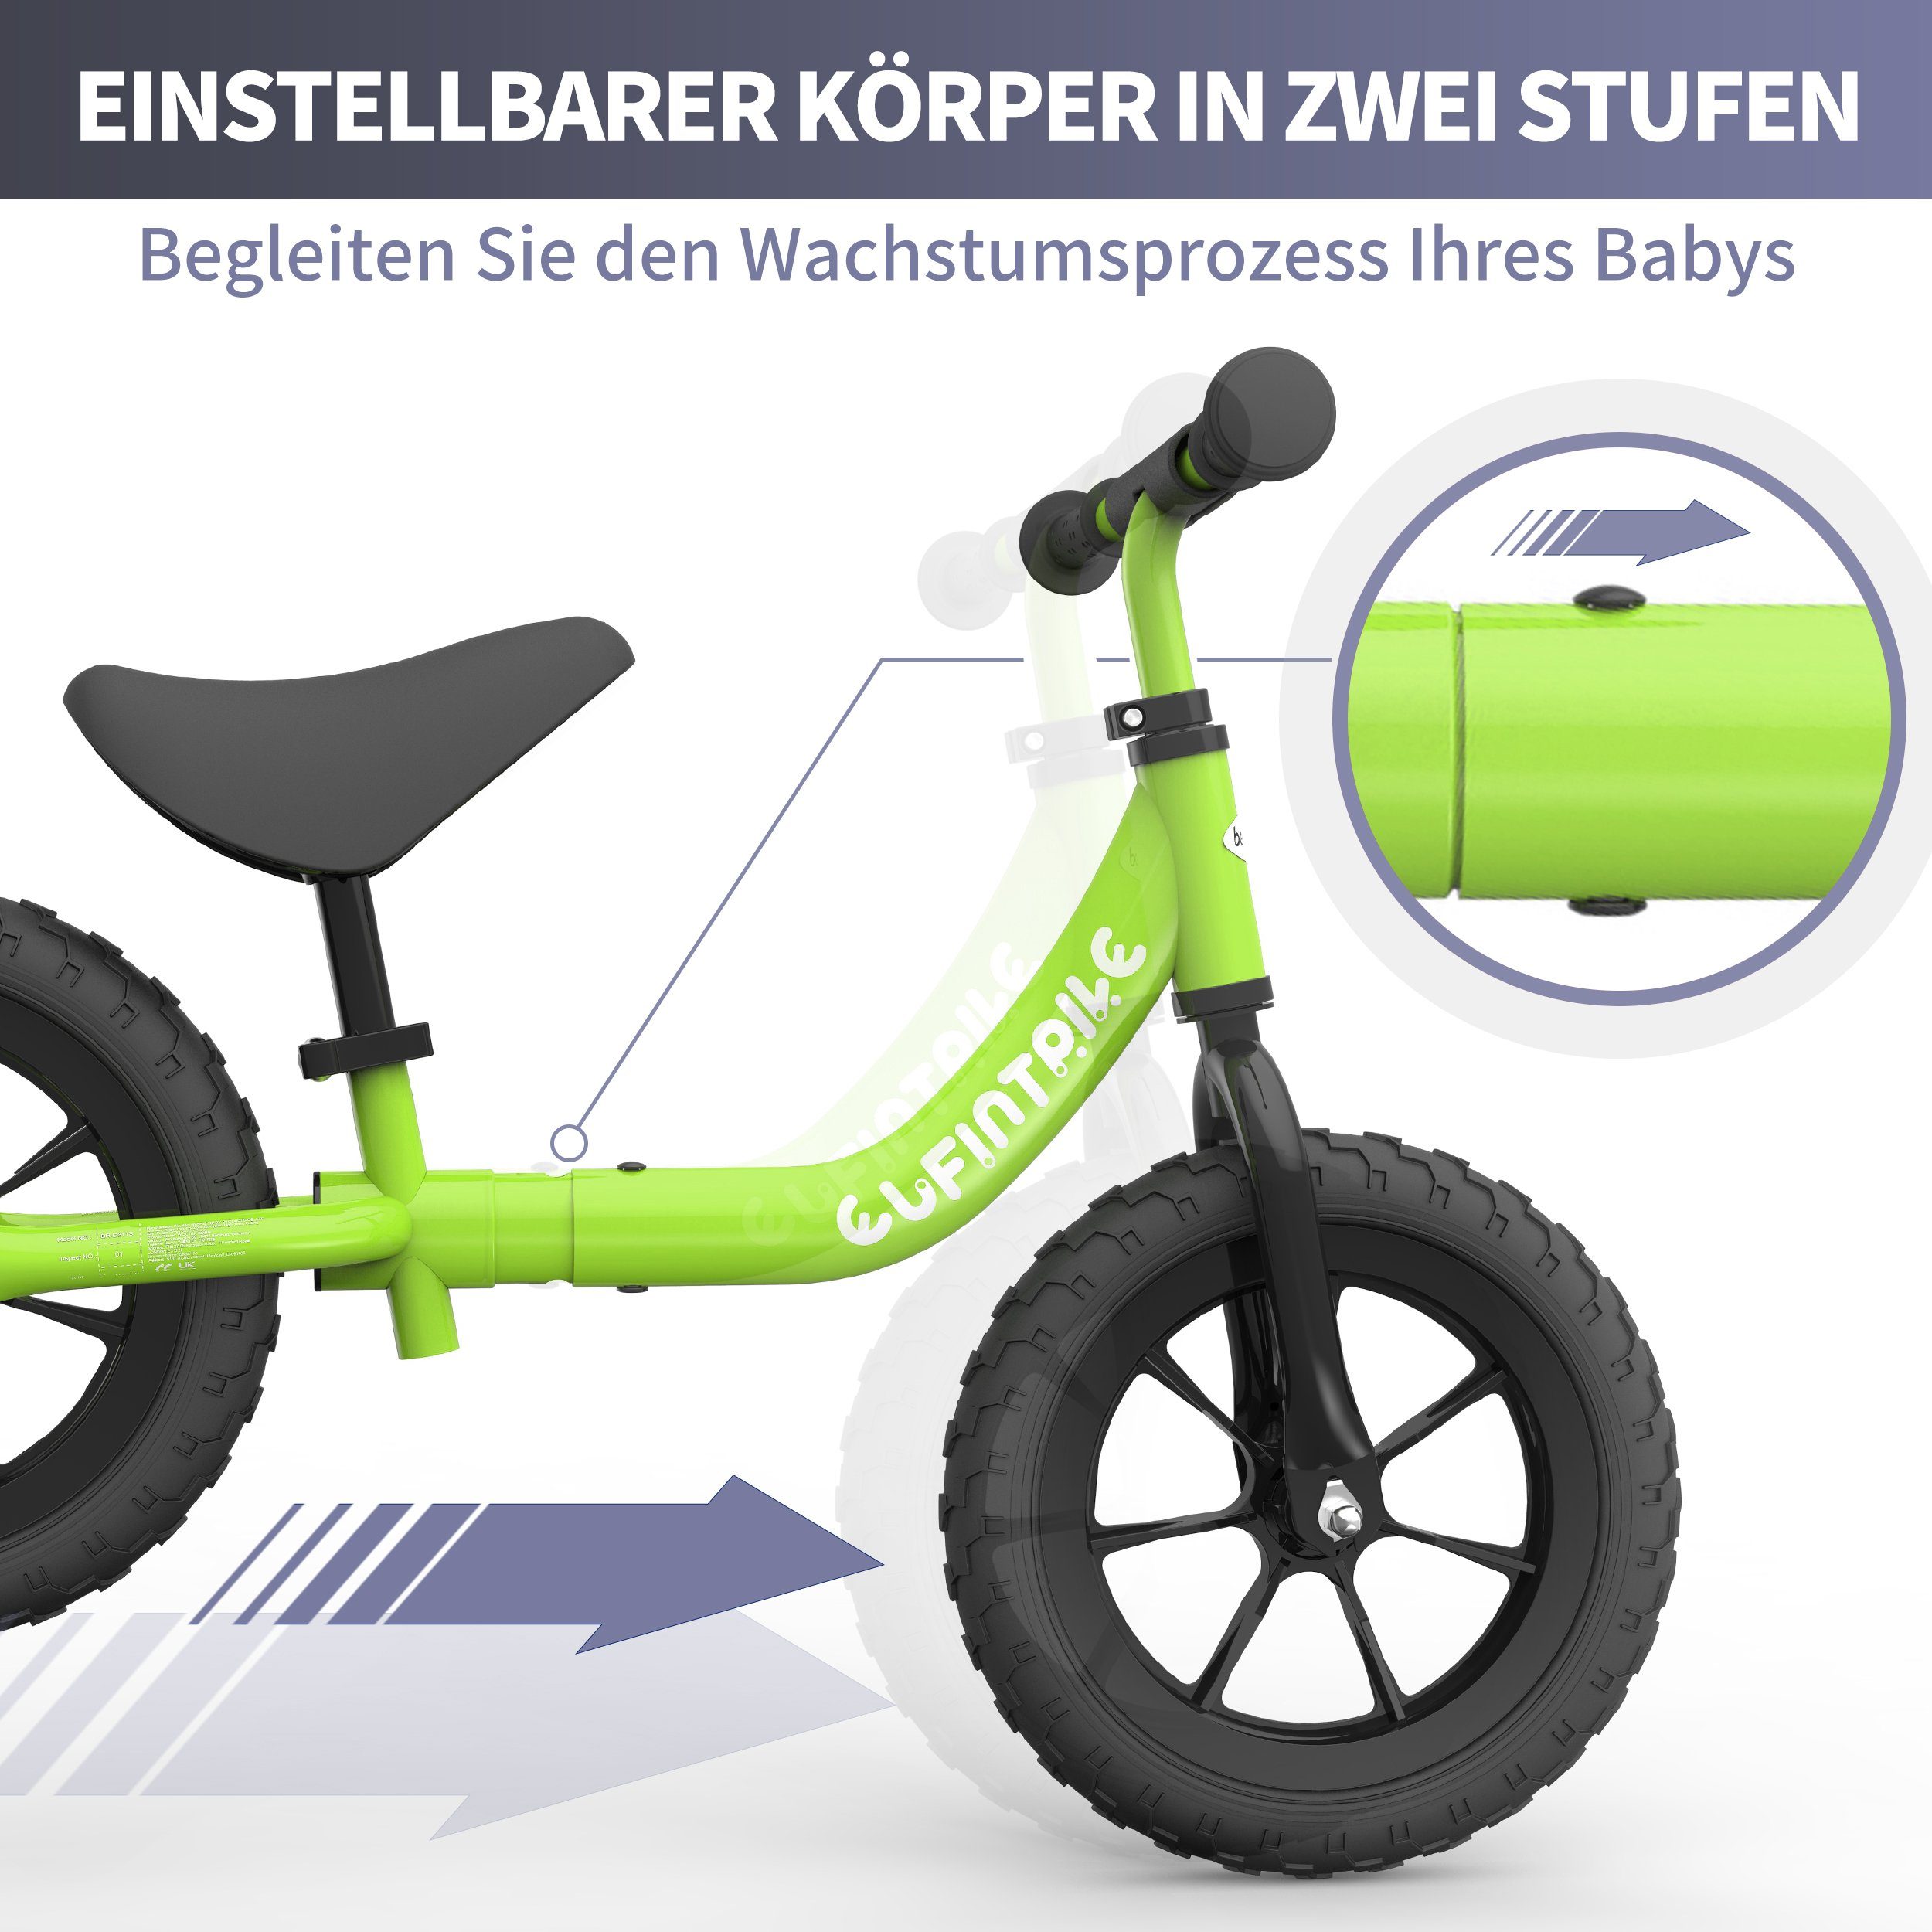 12 Zoll Laufrad Kinderlaufrad Roller Kinder Fahrrad Lauflernrad Lernrad grün 